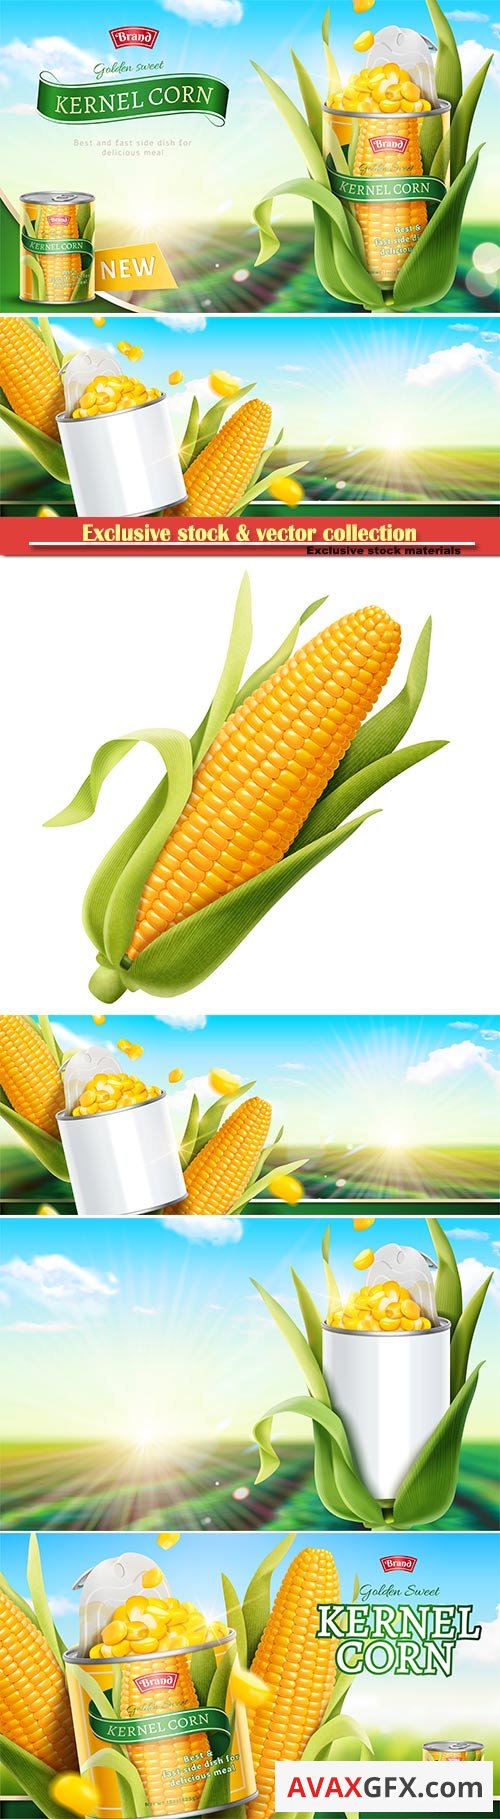 Premium kernel corn can ads in 3d vector illustration